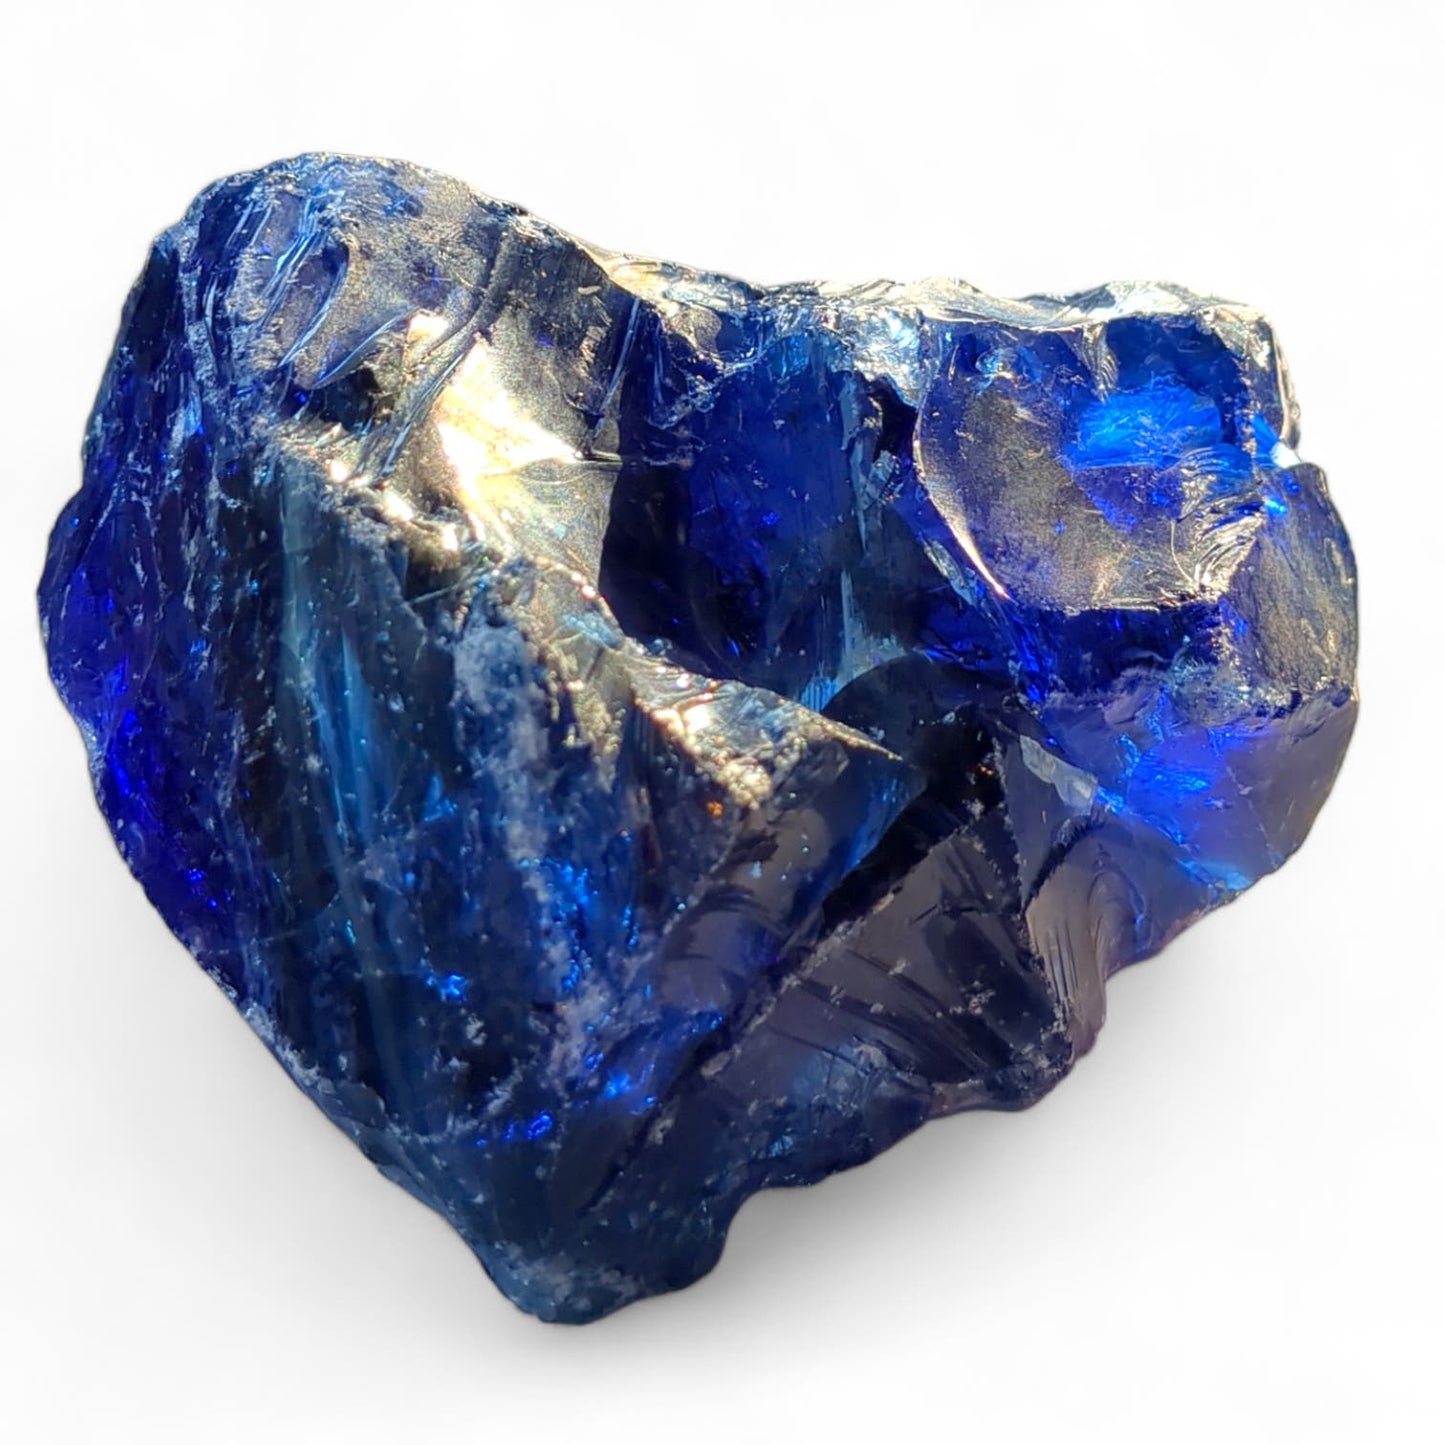 Cobalt Blue Art Glass Cullet Glowing Translucent Manganese Slag #4GX105